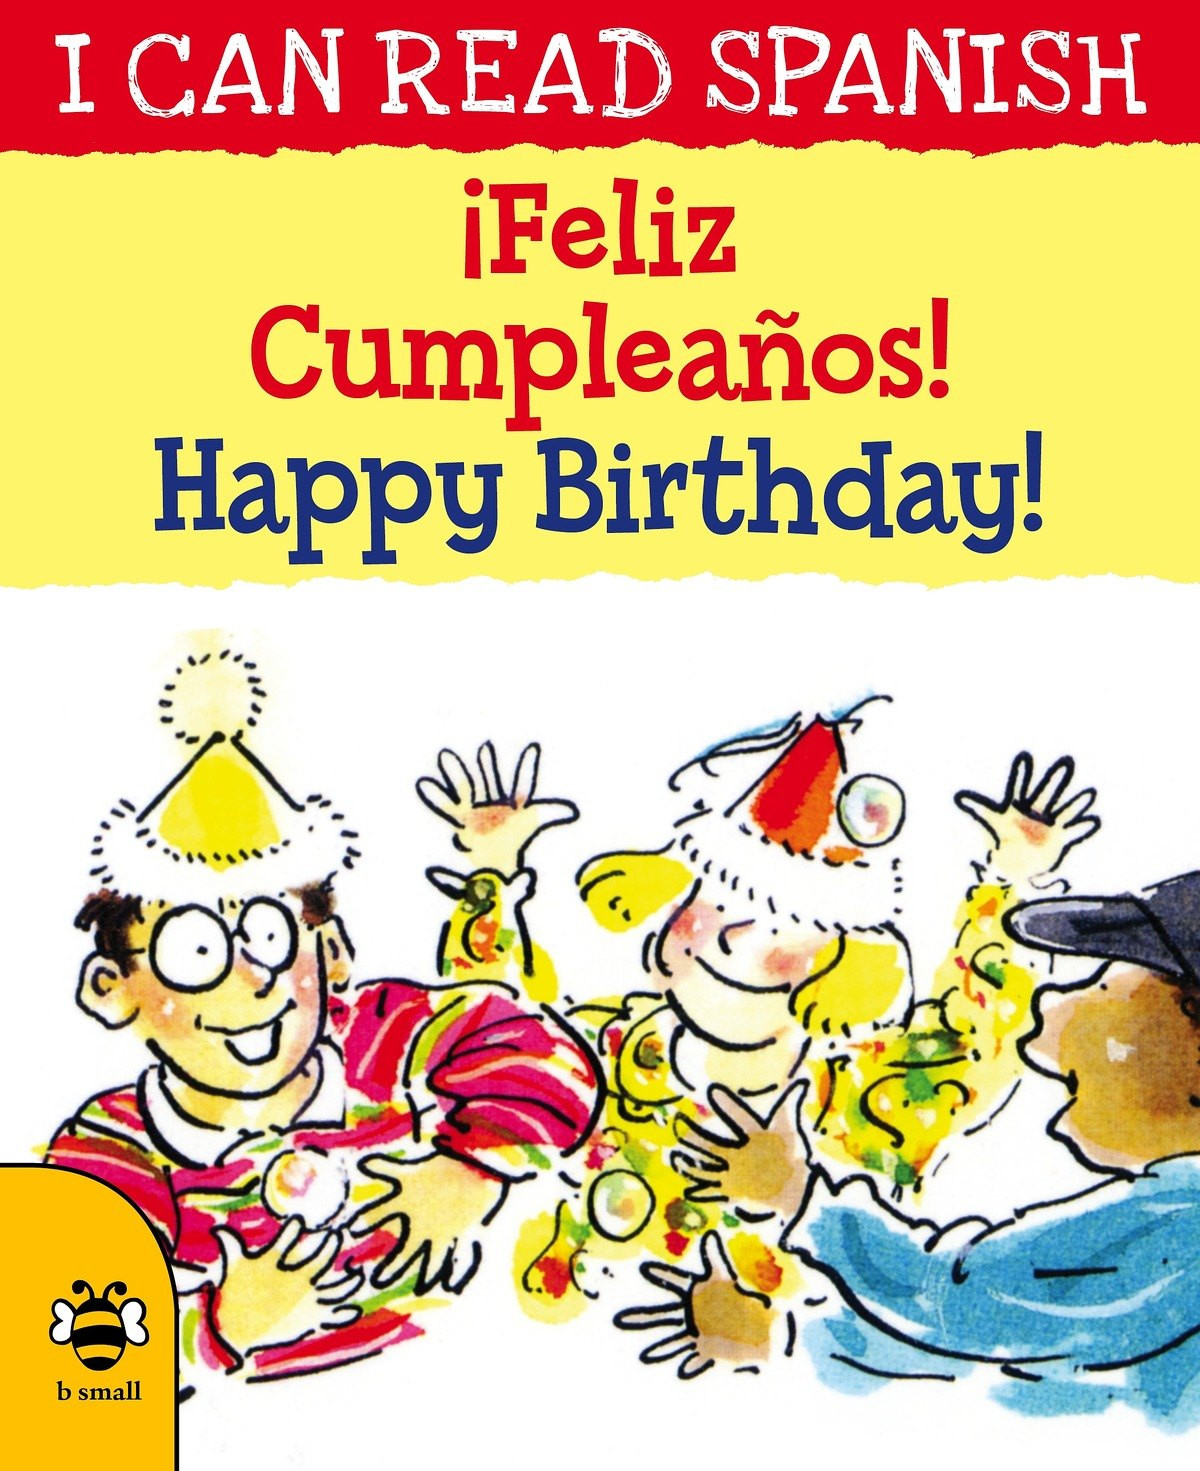 Funny Ways To Say Happy Birthday In Spanish